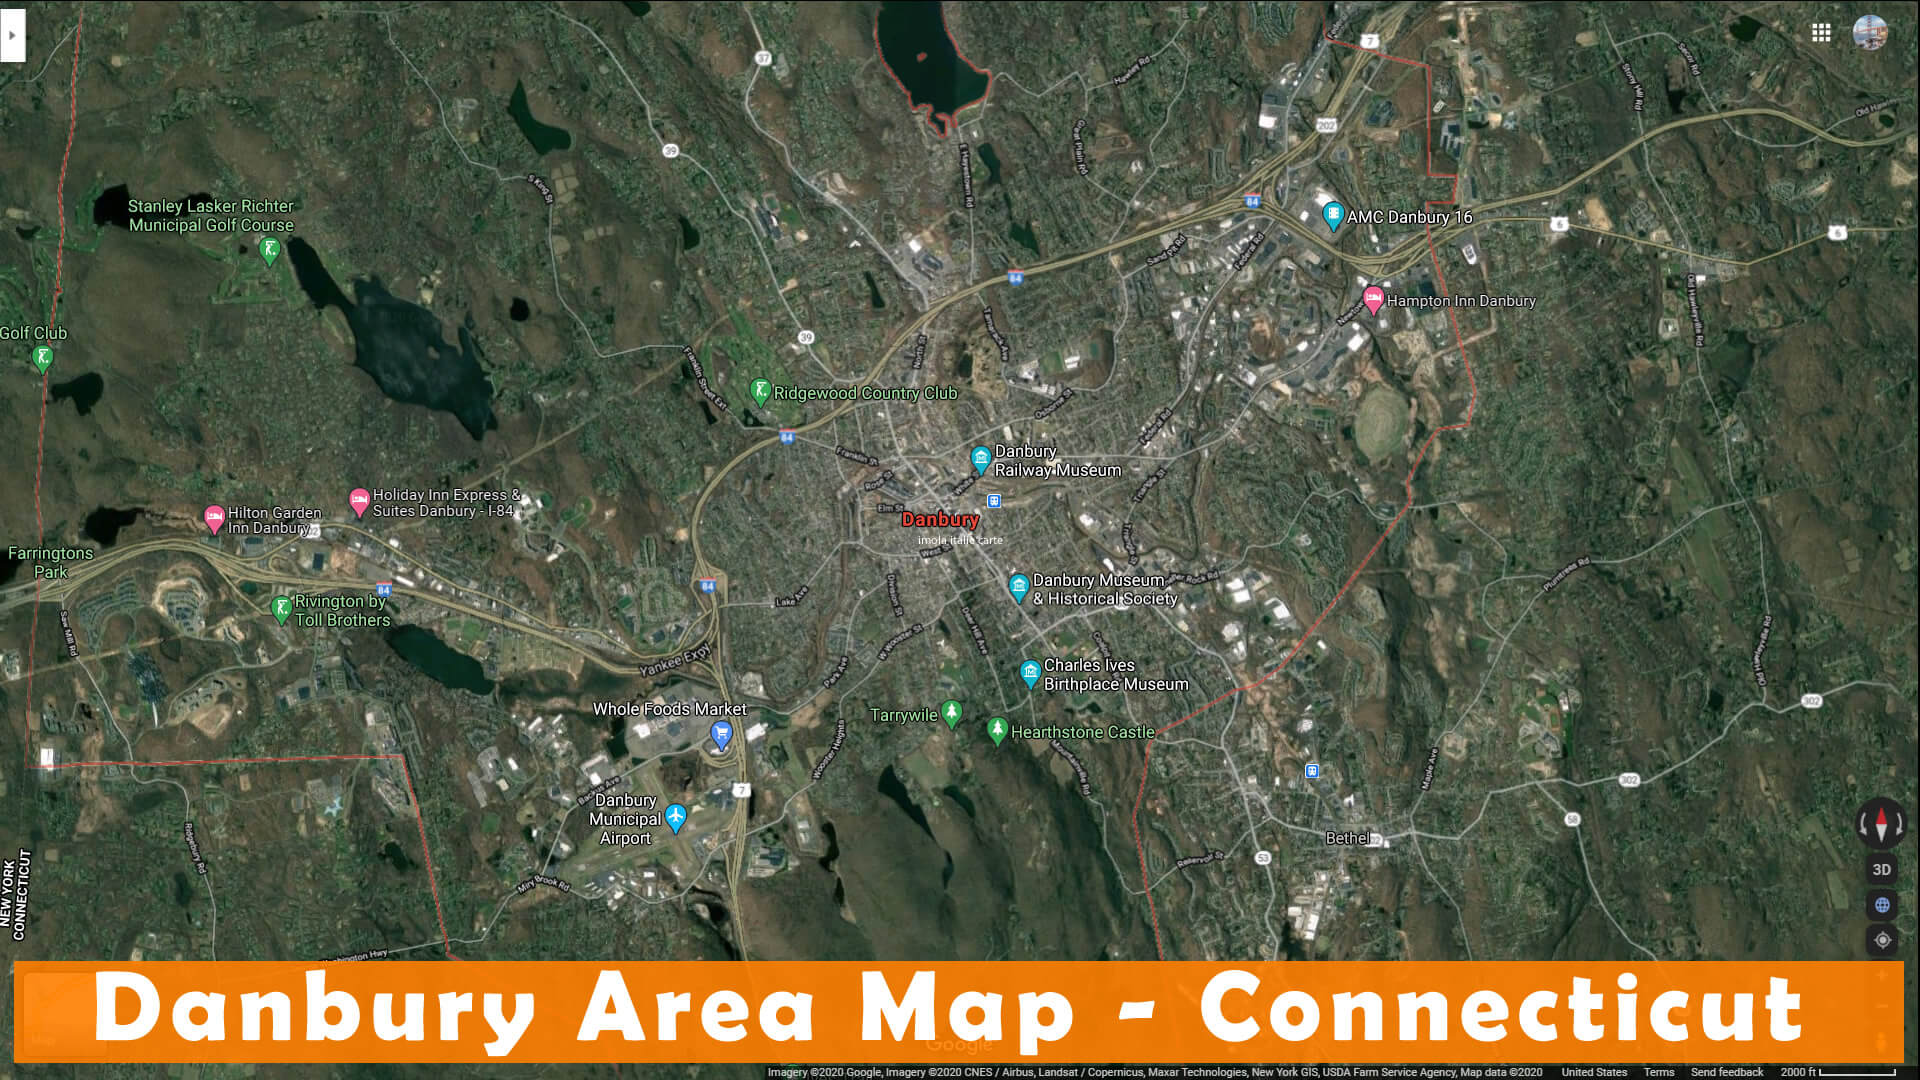 Danbury Area Map Connecticut